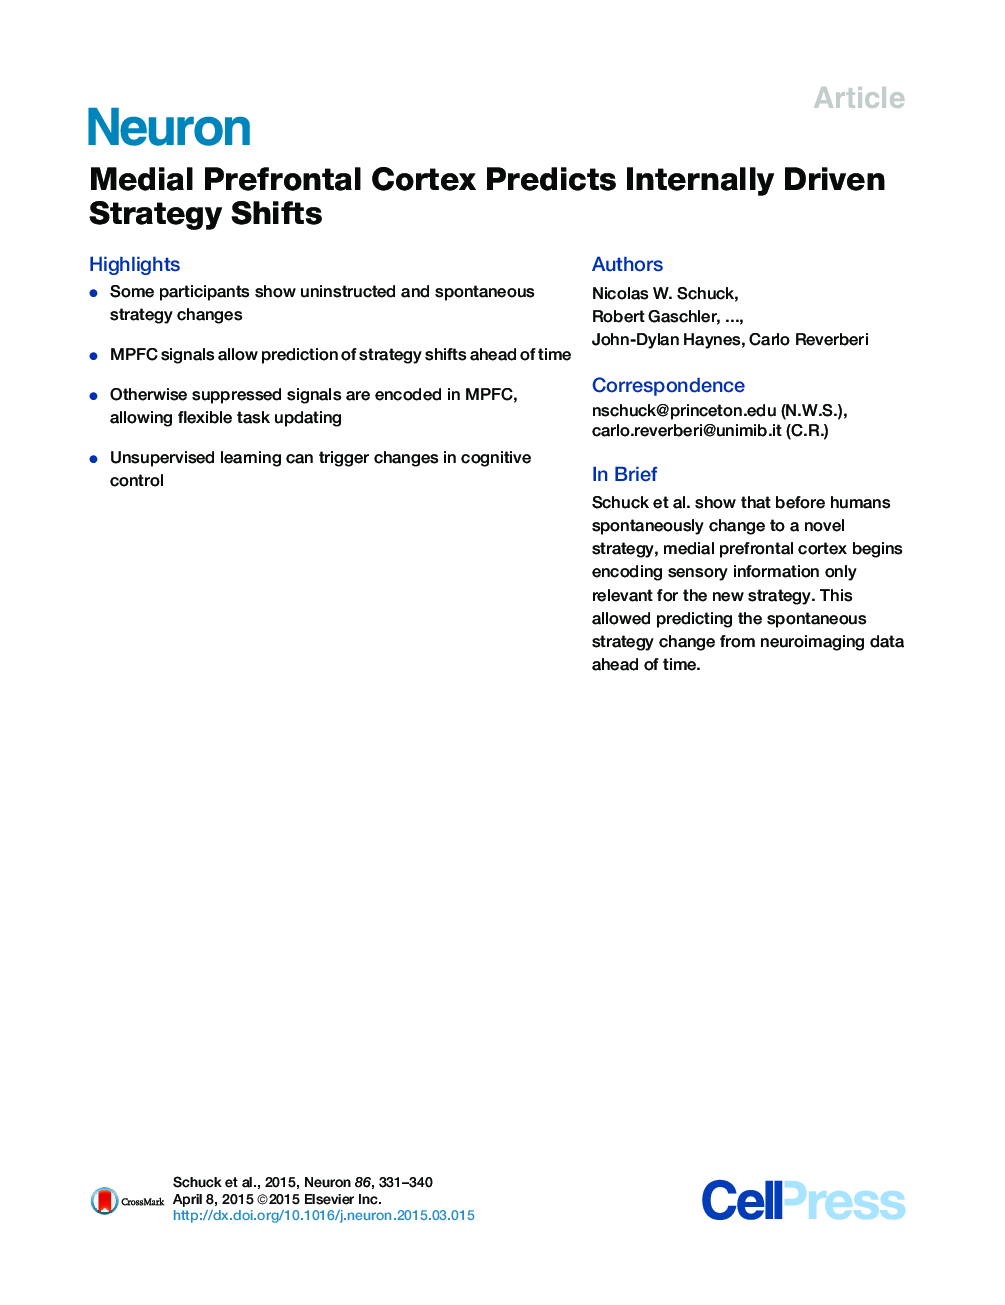 Medial Prefrontal Cortex Predicts Internally Driven Strategy Shifts